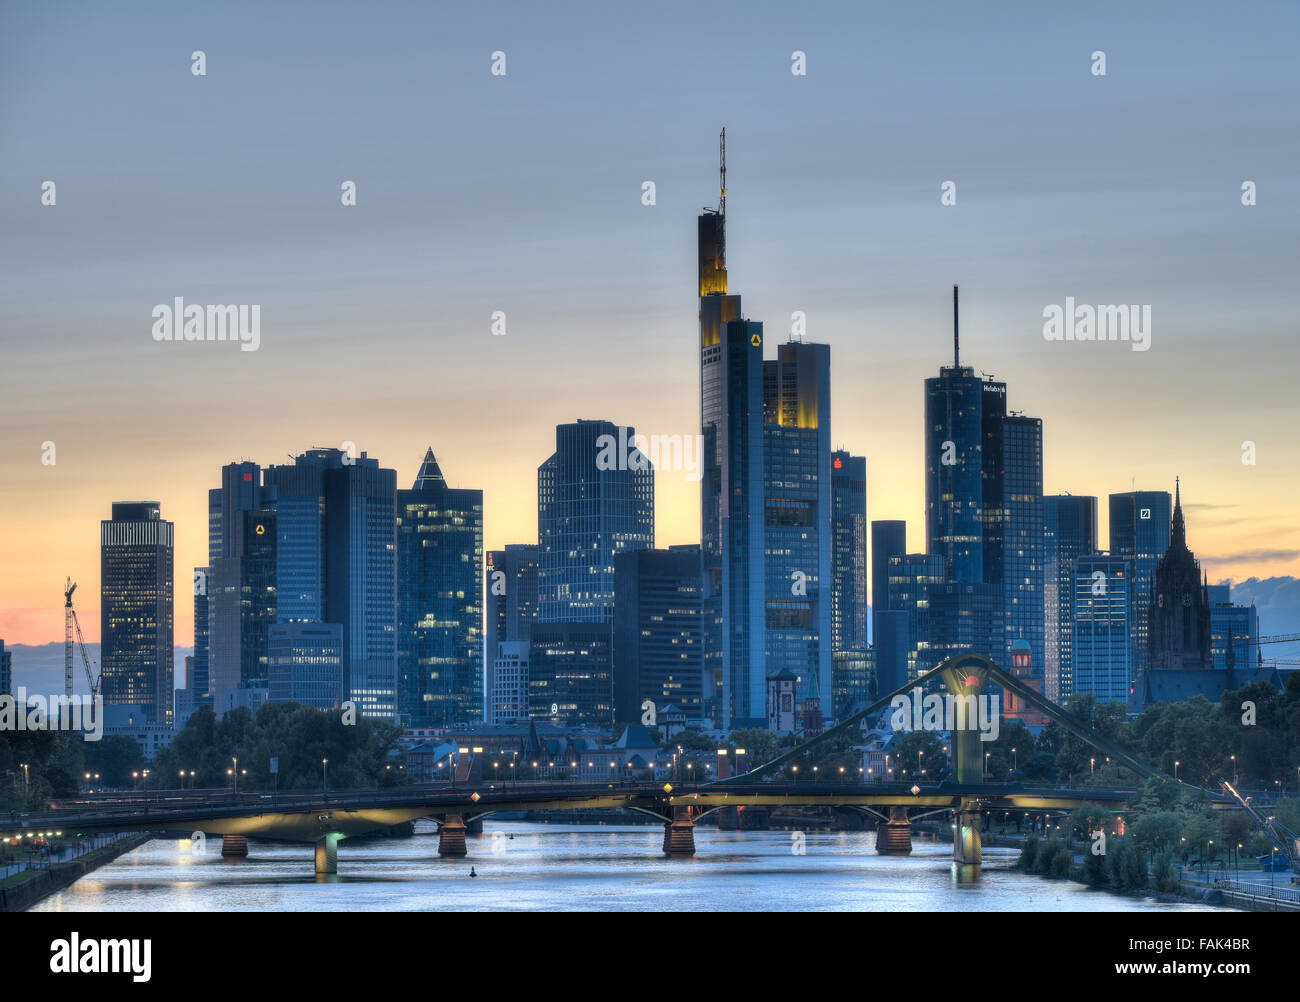 Skyline, Financial District at dusk, TaunusTurm, Tower 185, Commerzbank, Messeturm, Helaba Landesbank Hessen, German Bank Stock Photo